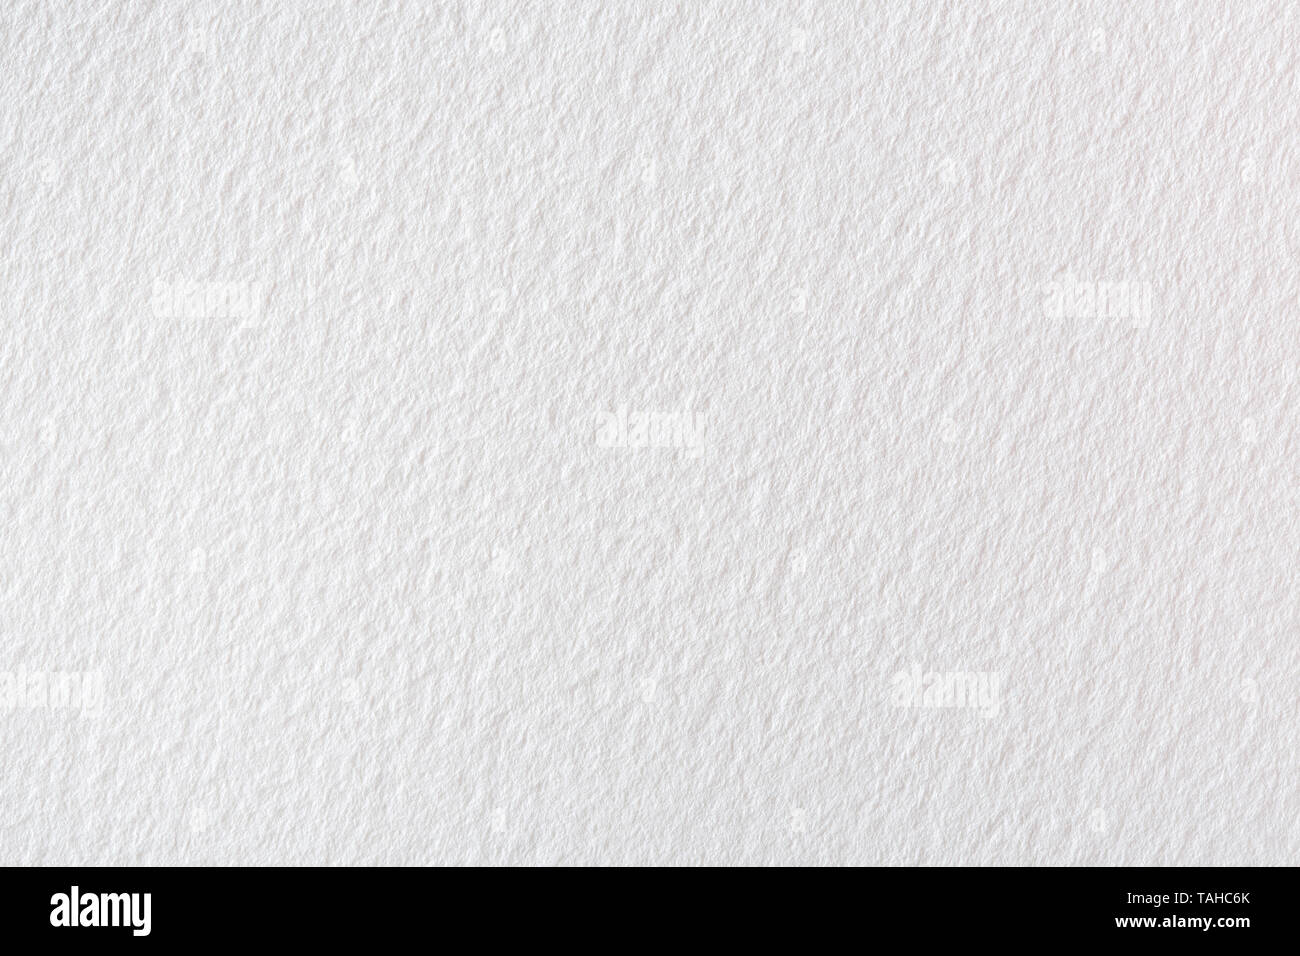 Textura de papel blanco fotografías e imágenes de alta resolución - Alamy